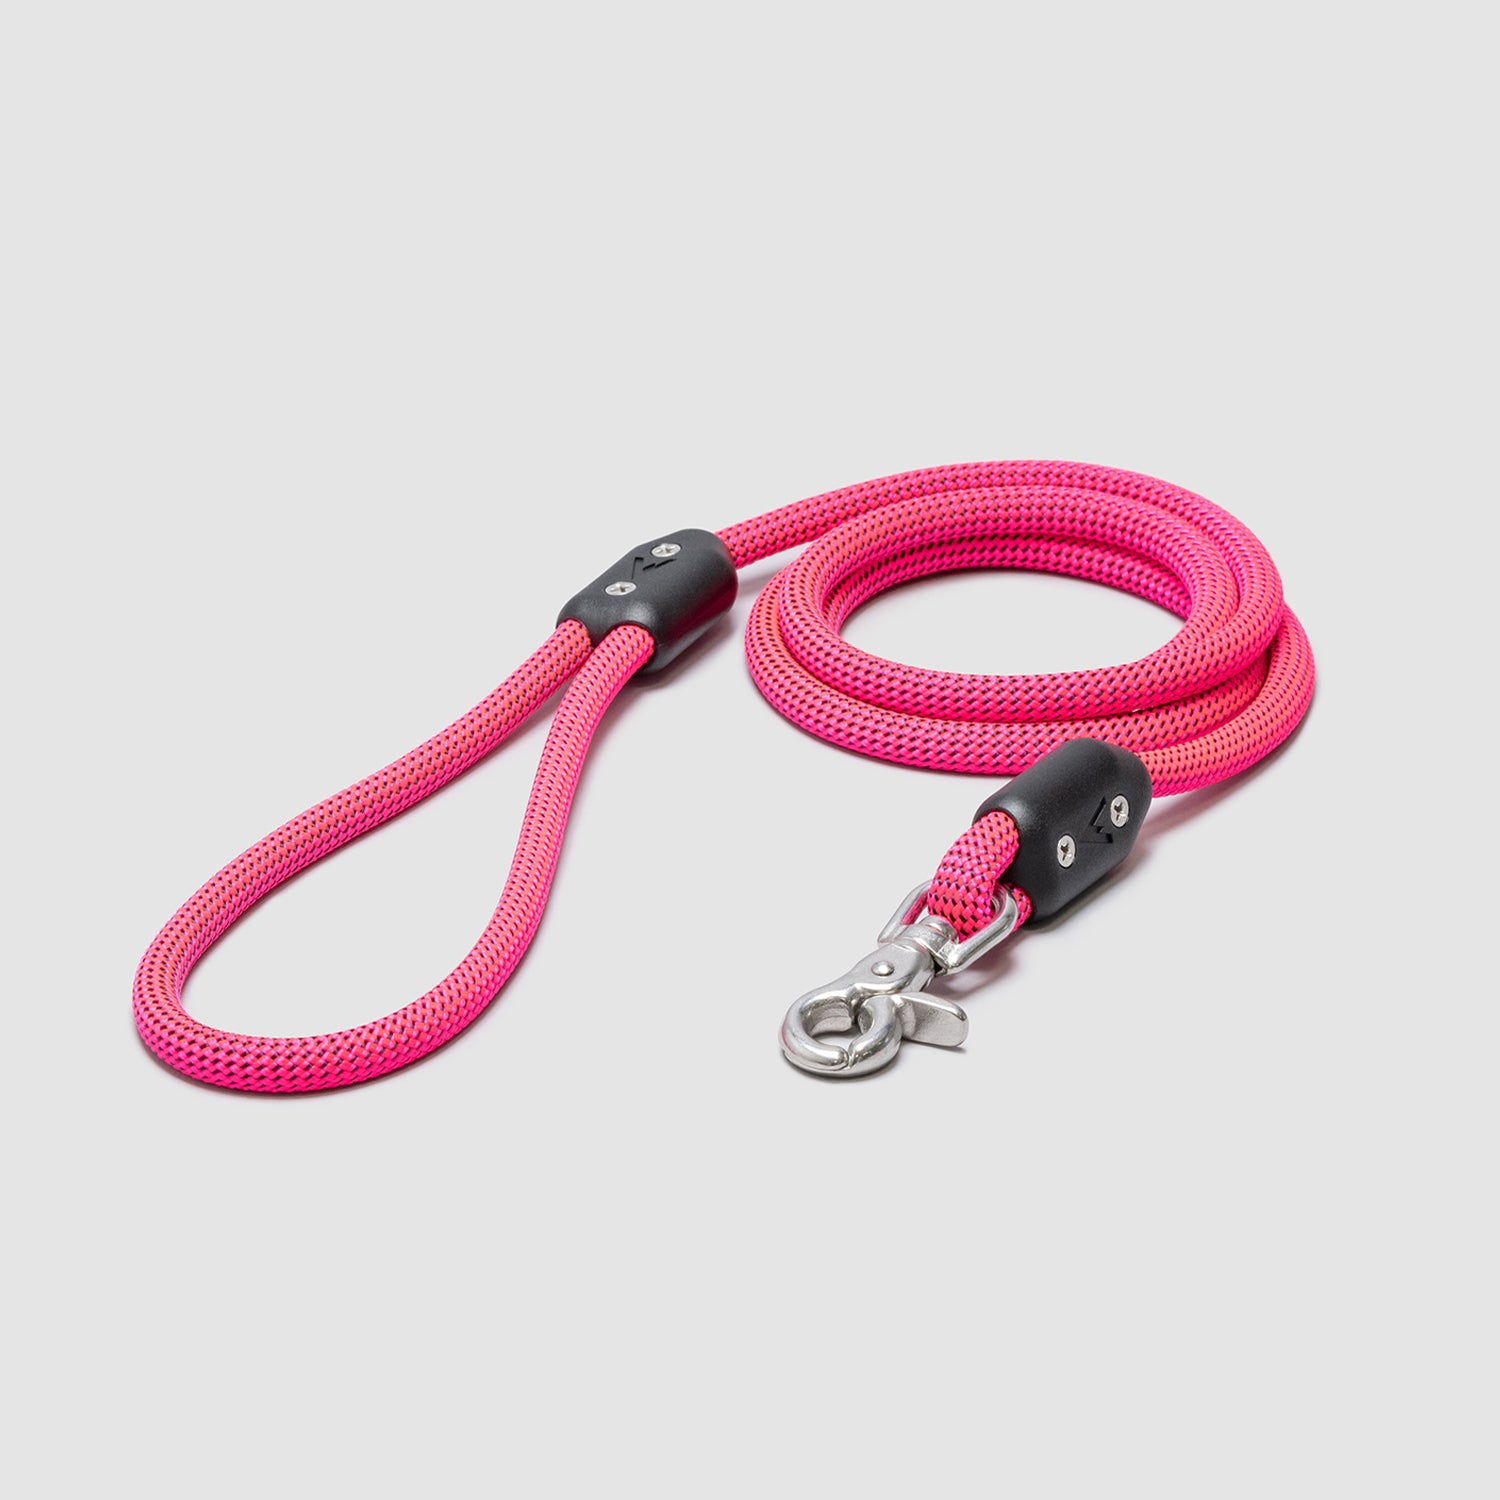 atlas pet company lifetime leash climbing rope lifetime warranty dog leash --pink